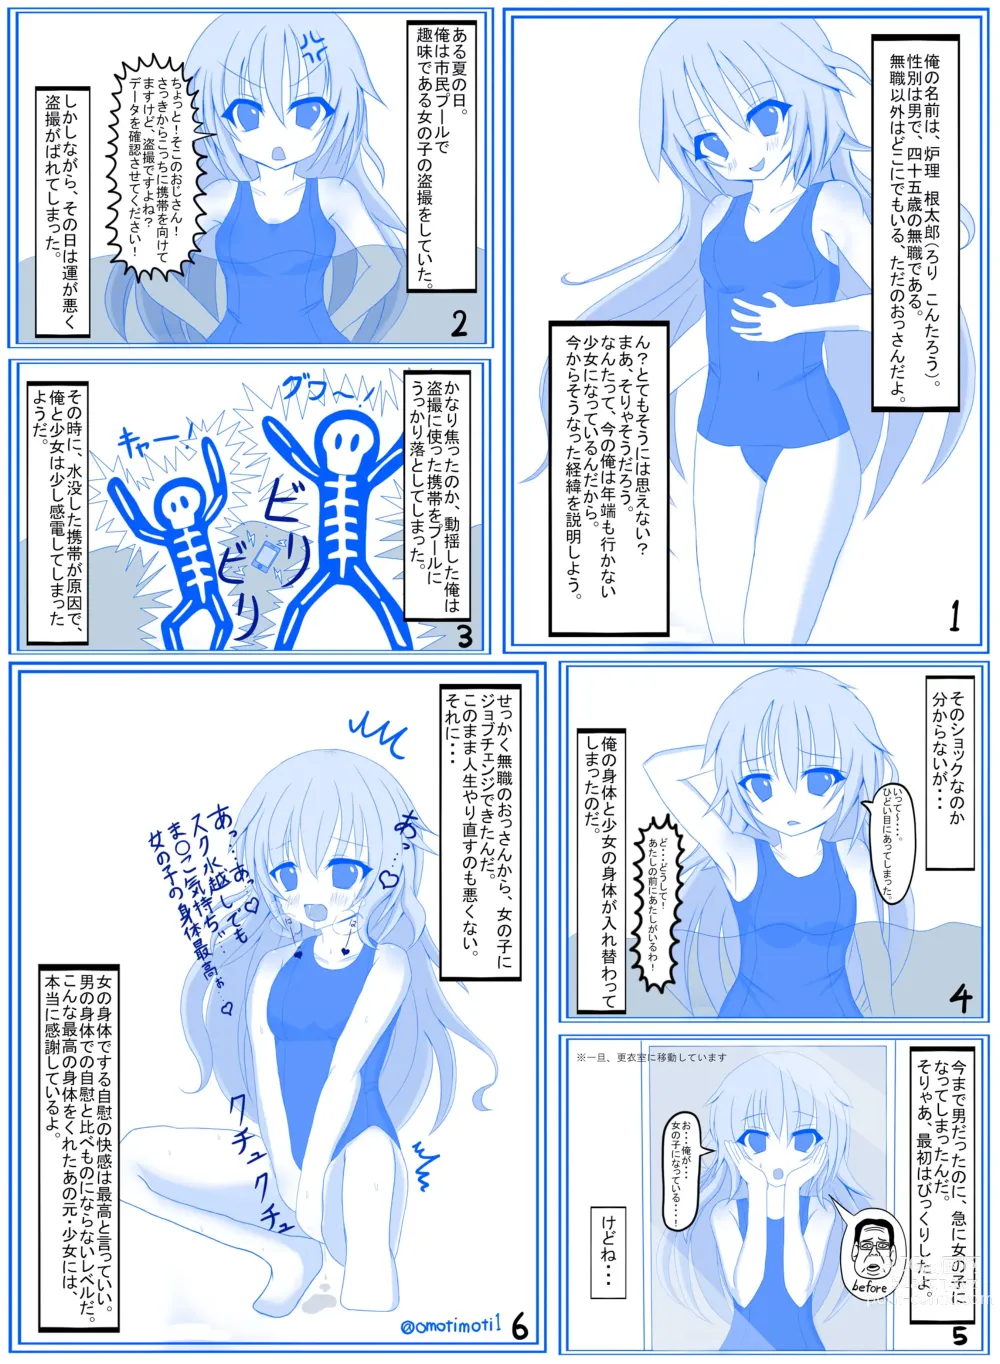 Page 53 of doujinshi Tanano Omochi no Manga